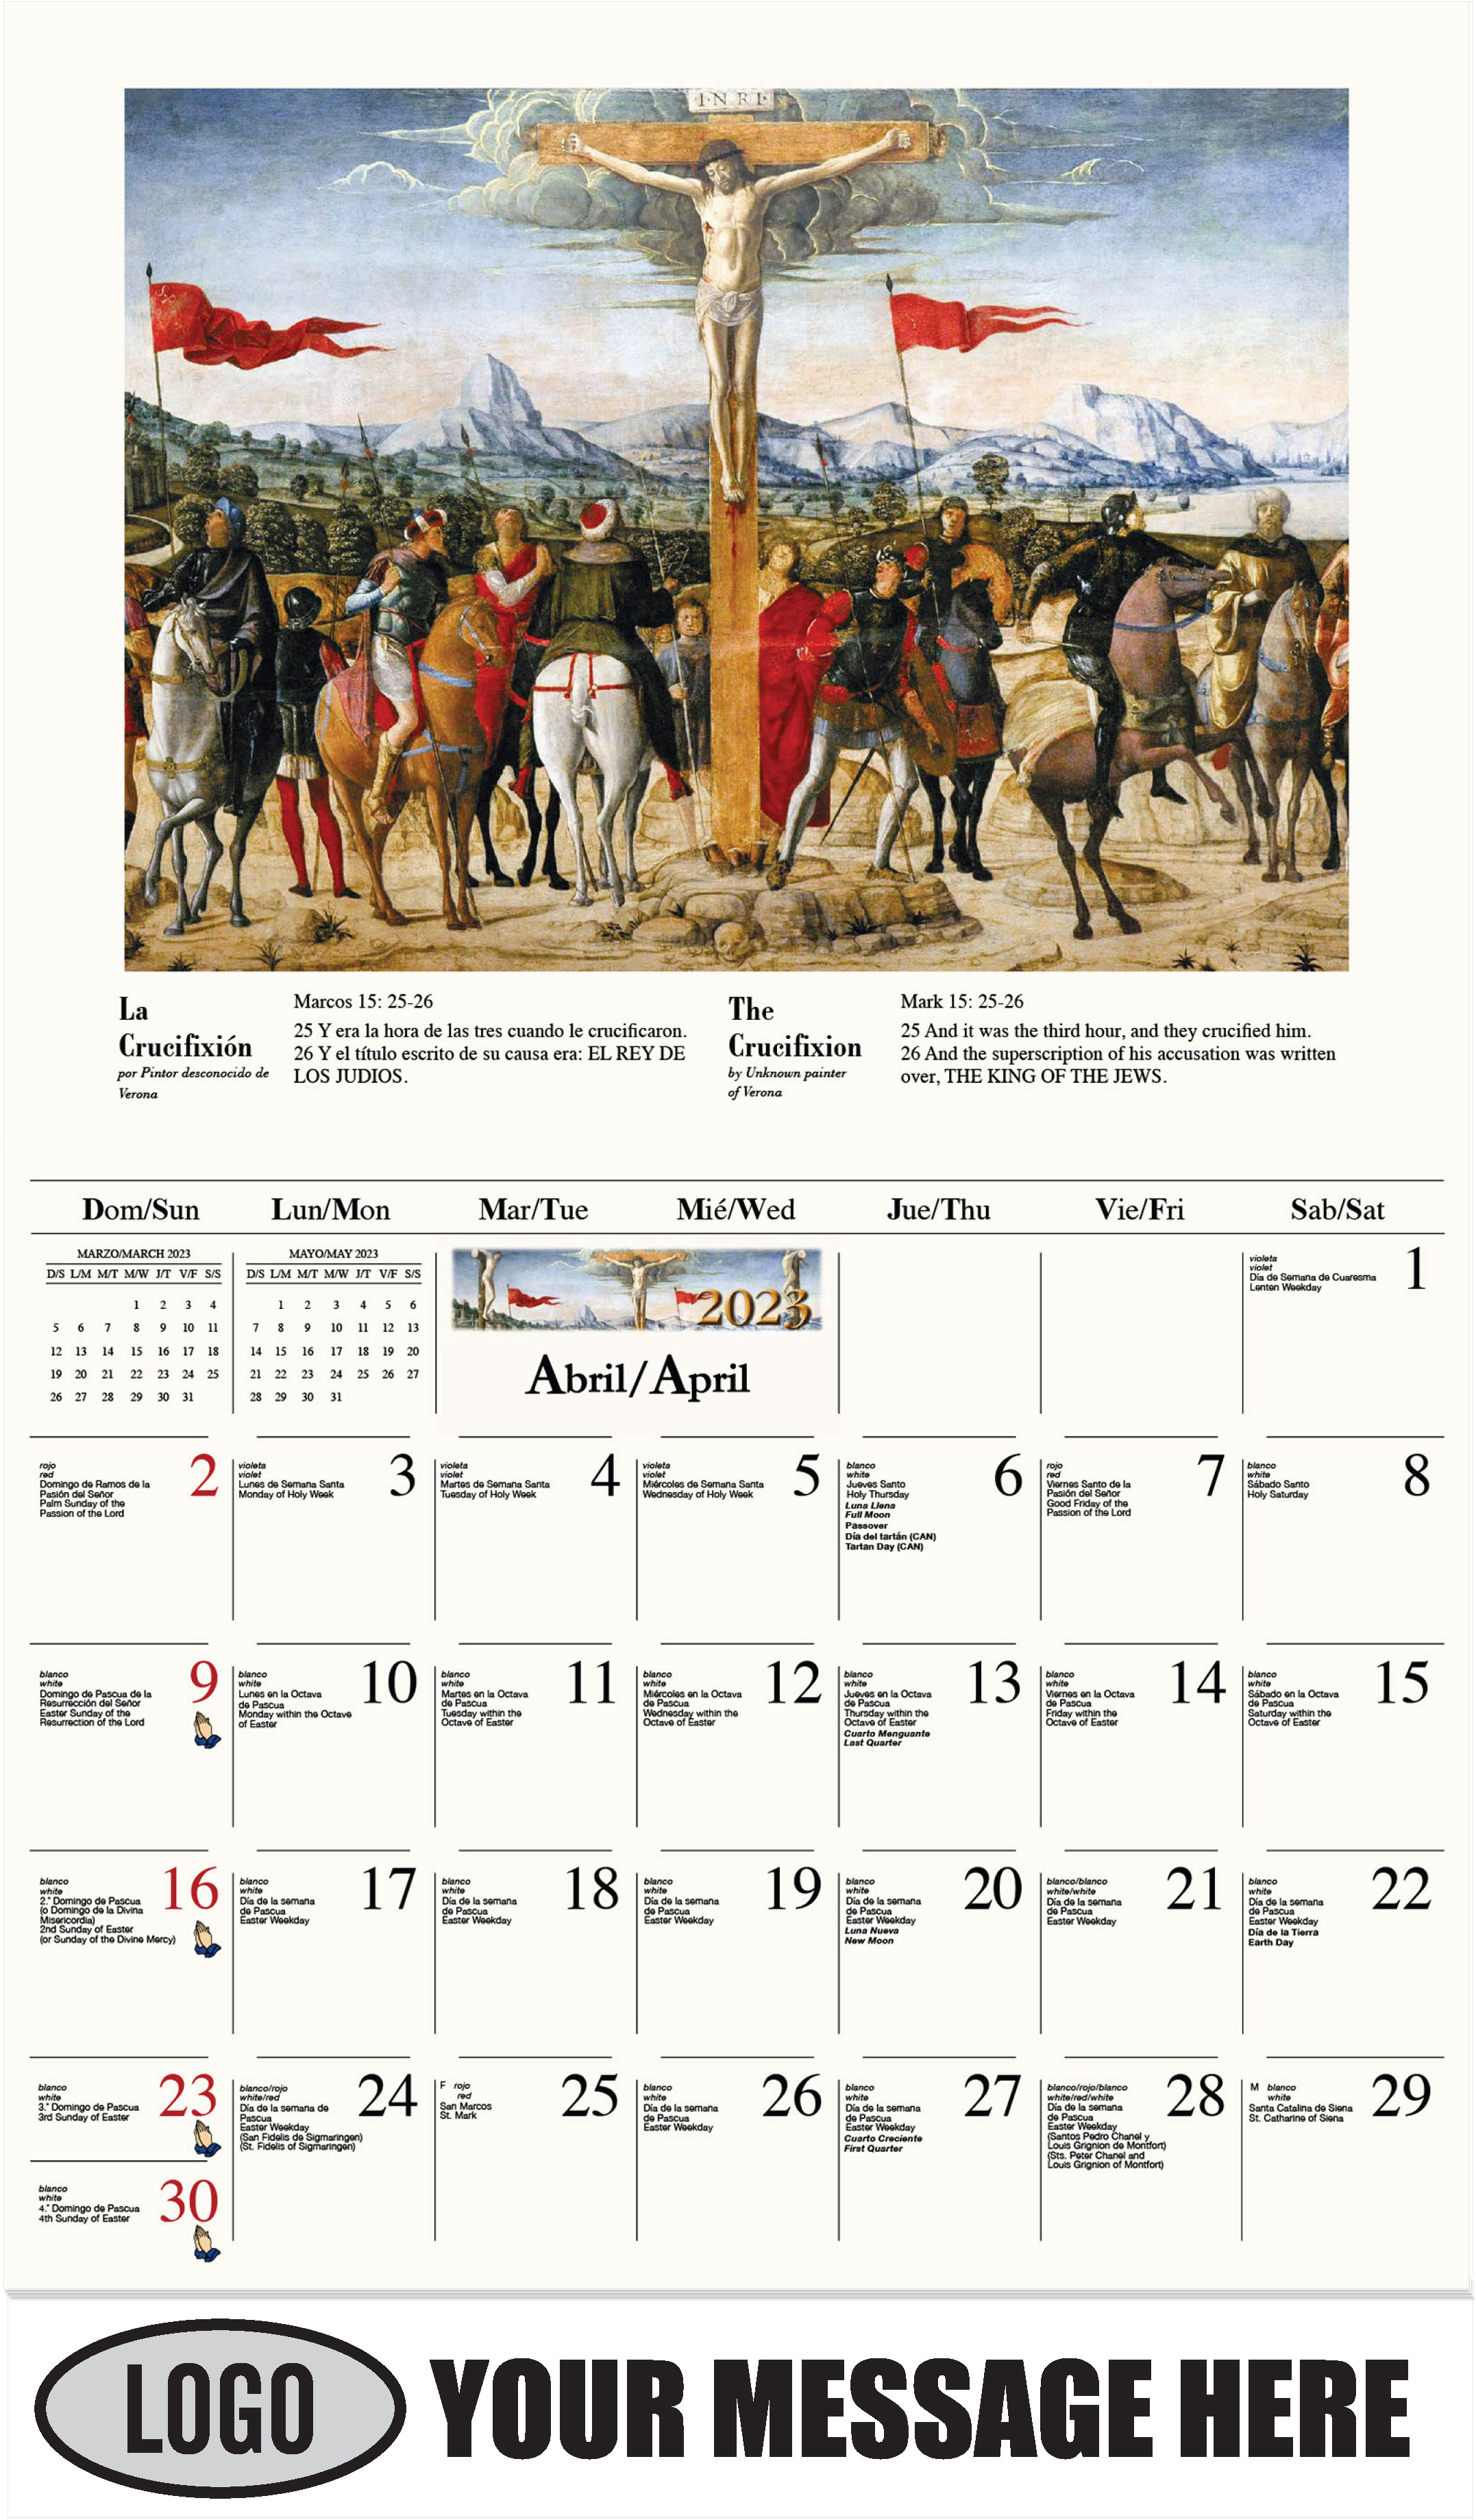 La crucifixión por Pintor desconocido de Verona - April - Catholic Inspiration (Spanish-English bilingual) 2023 Promotional Calendar